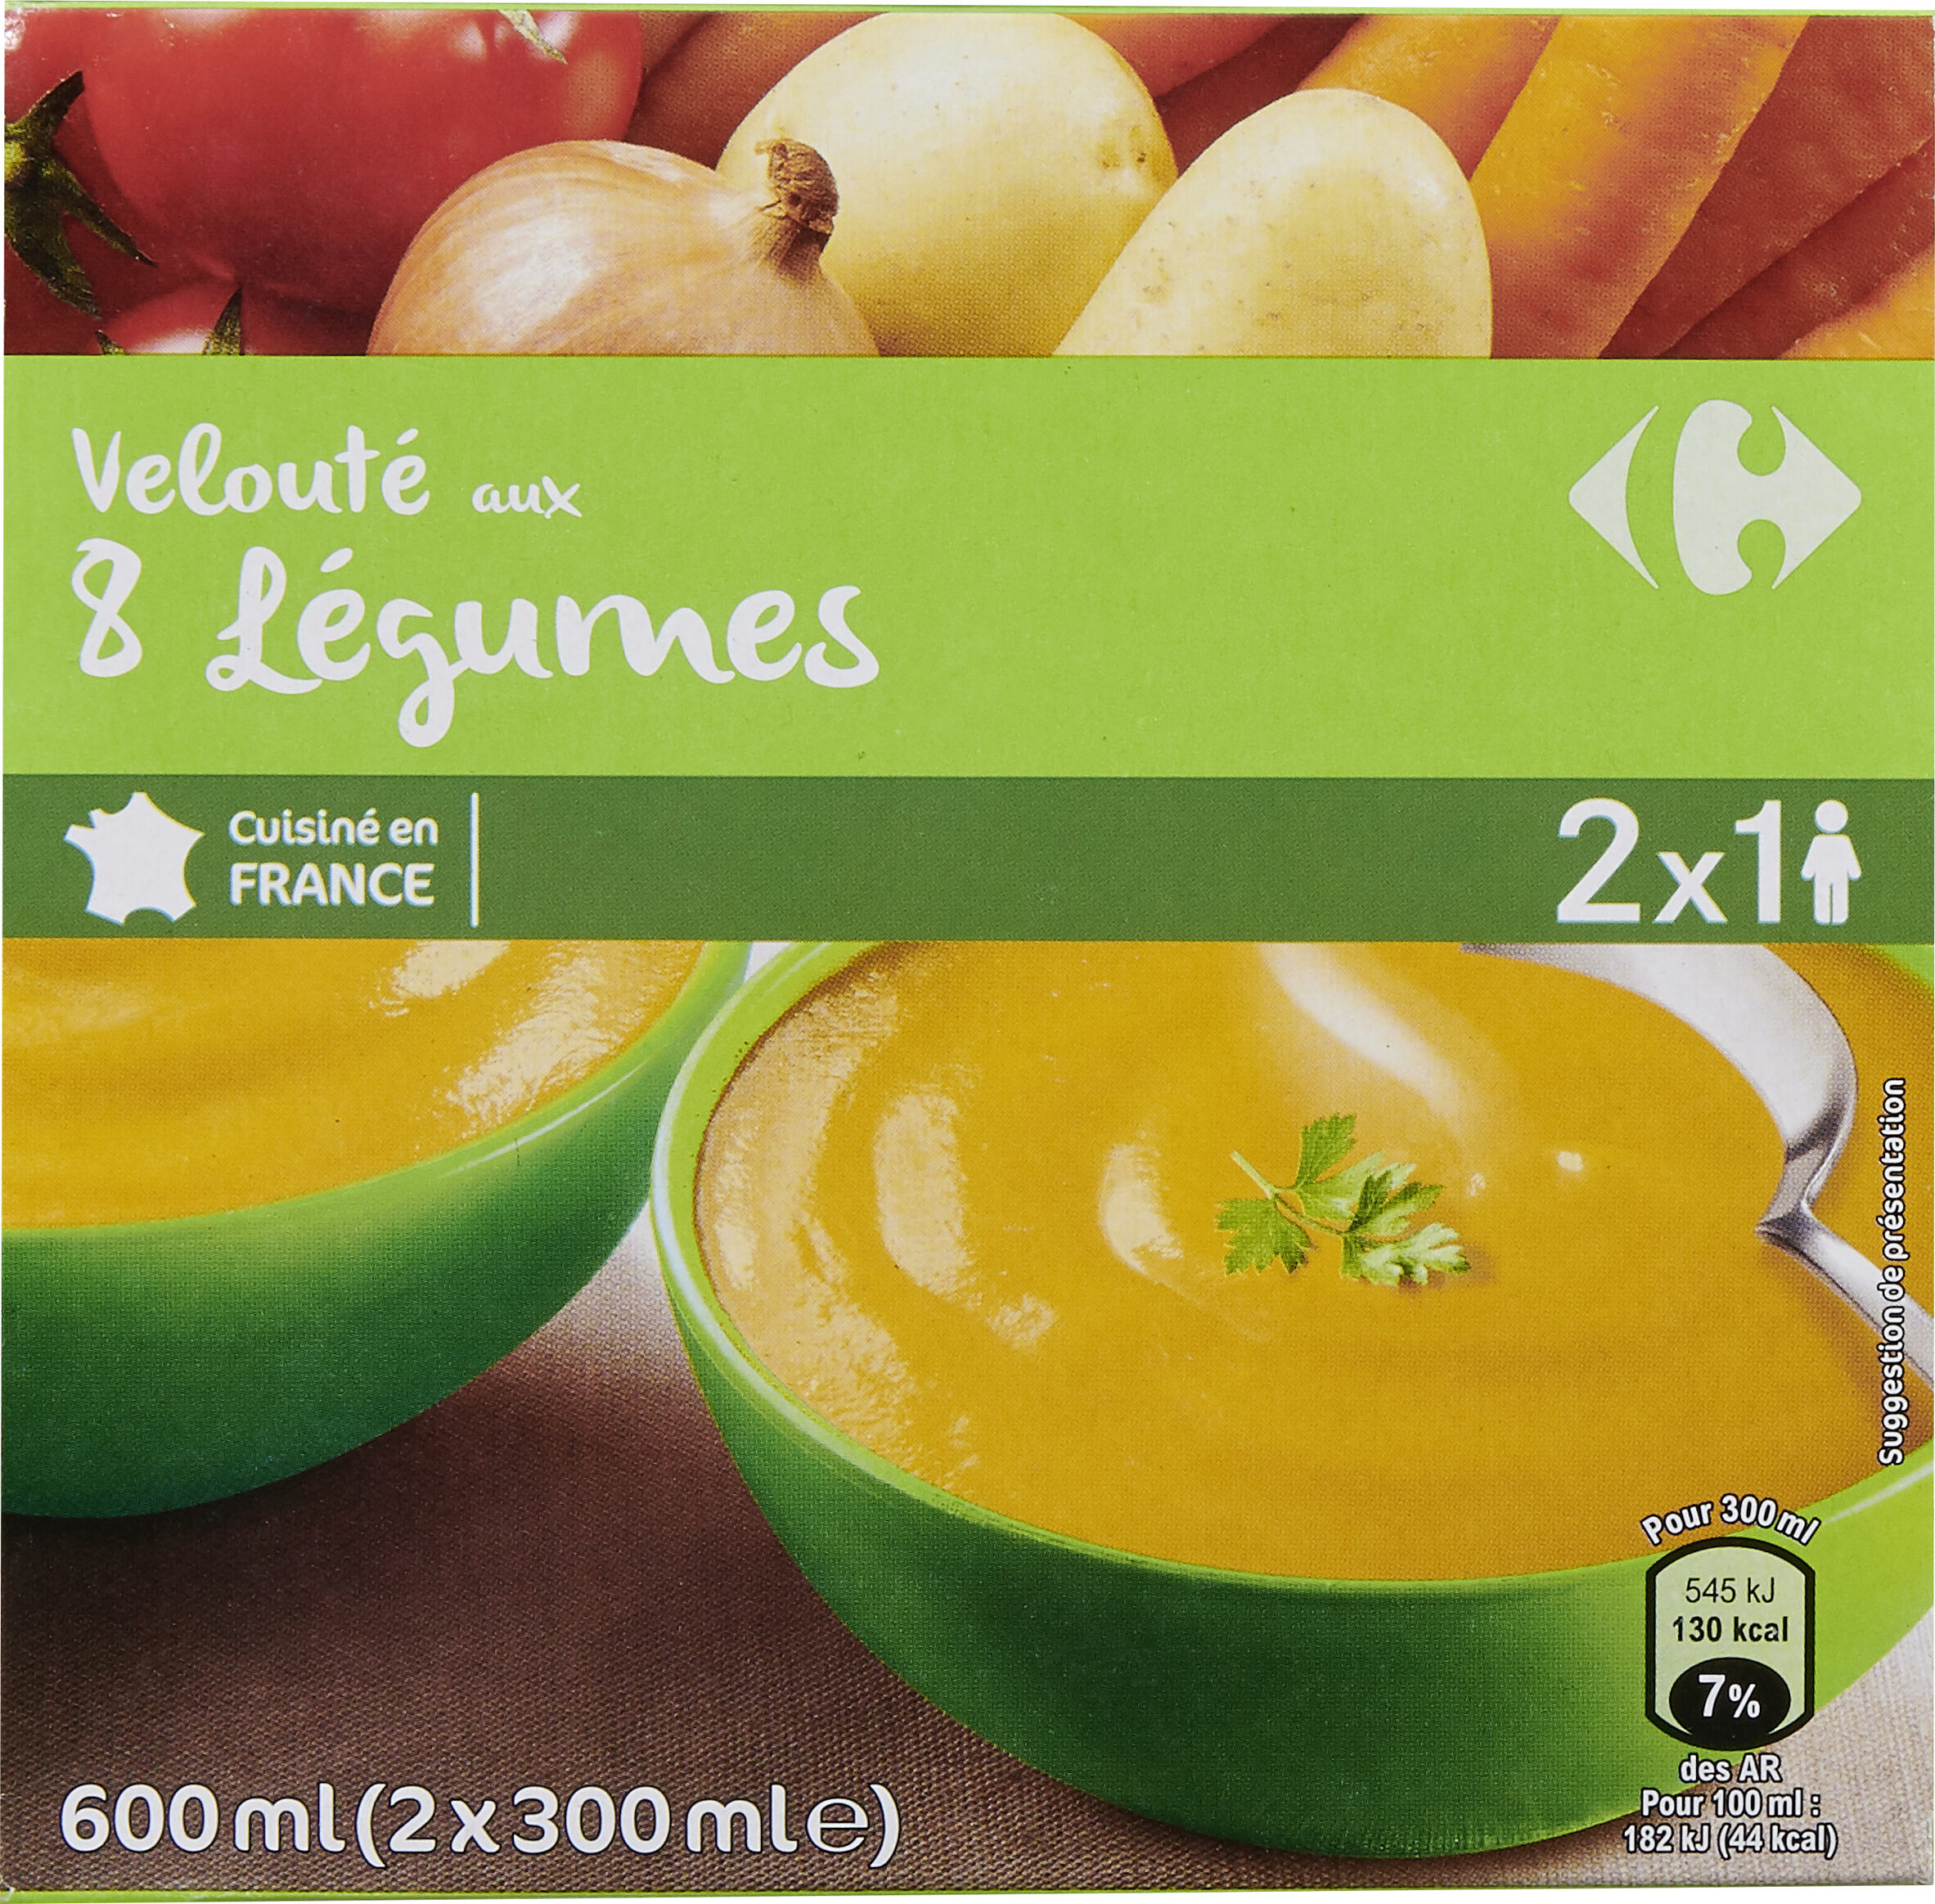 Velouté aux 8 légumes - نتاج - fr